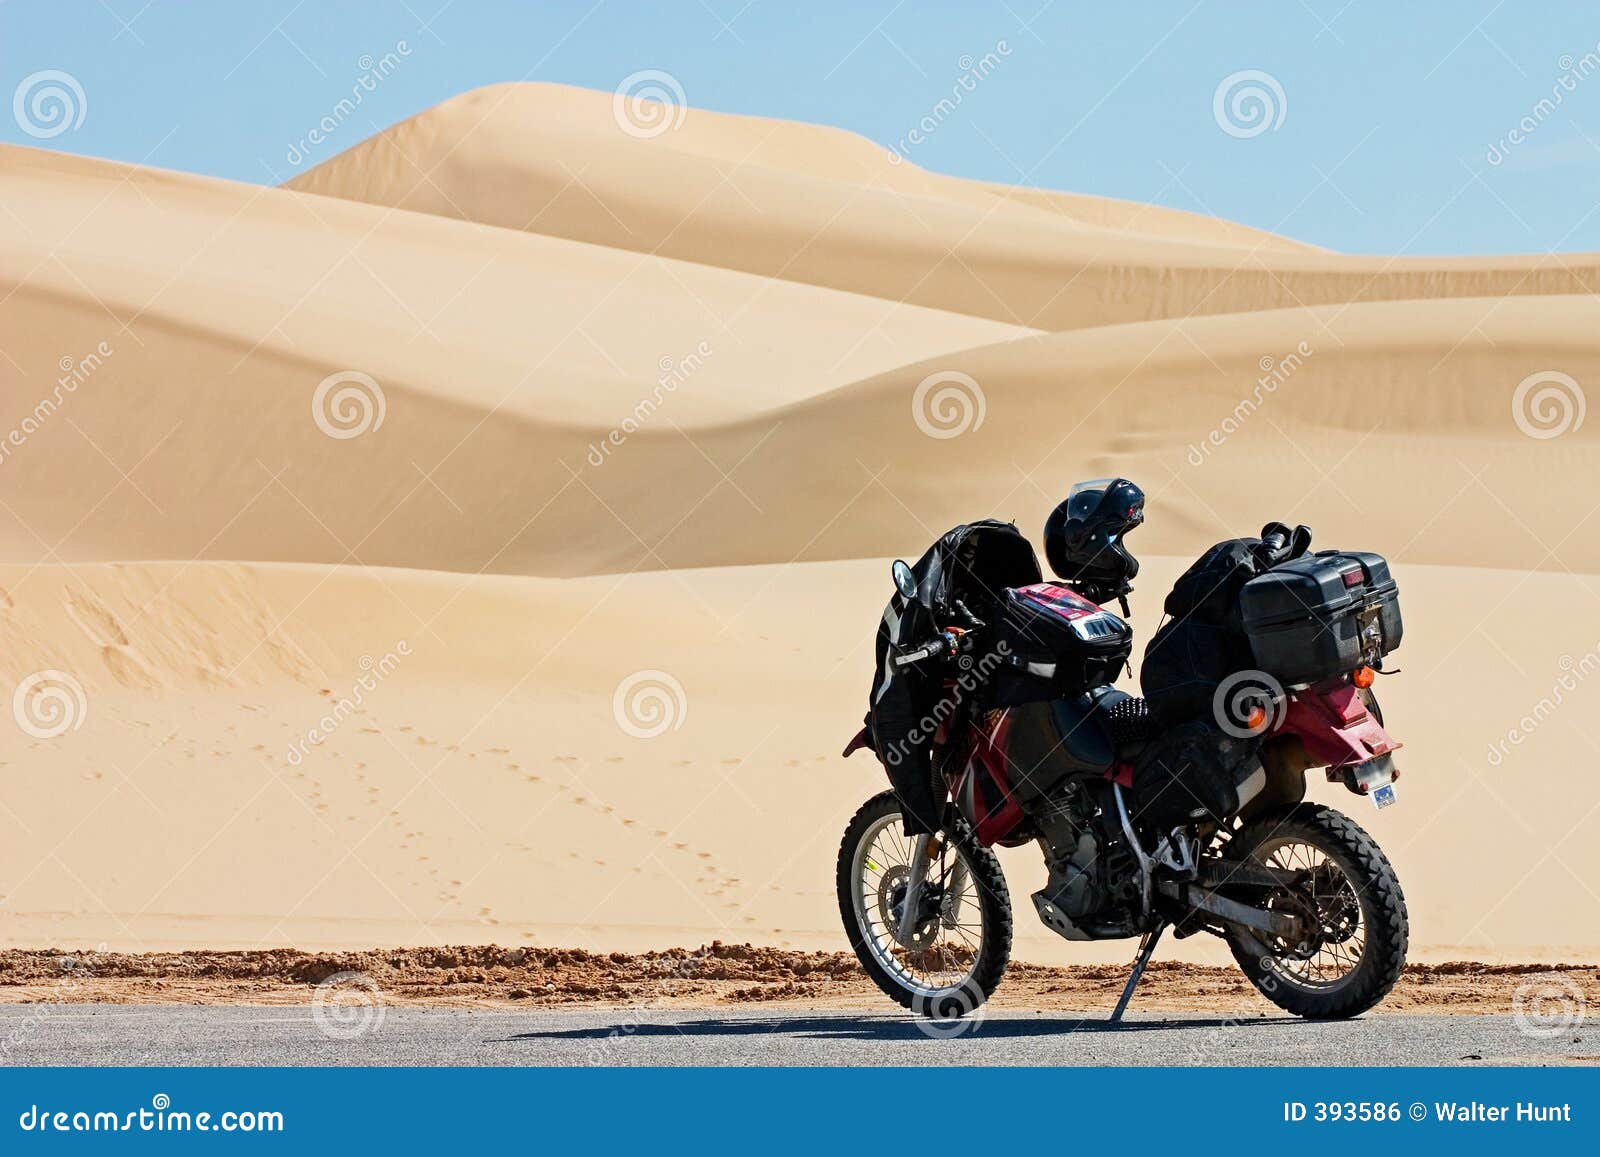 imperial dunes motorcycle